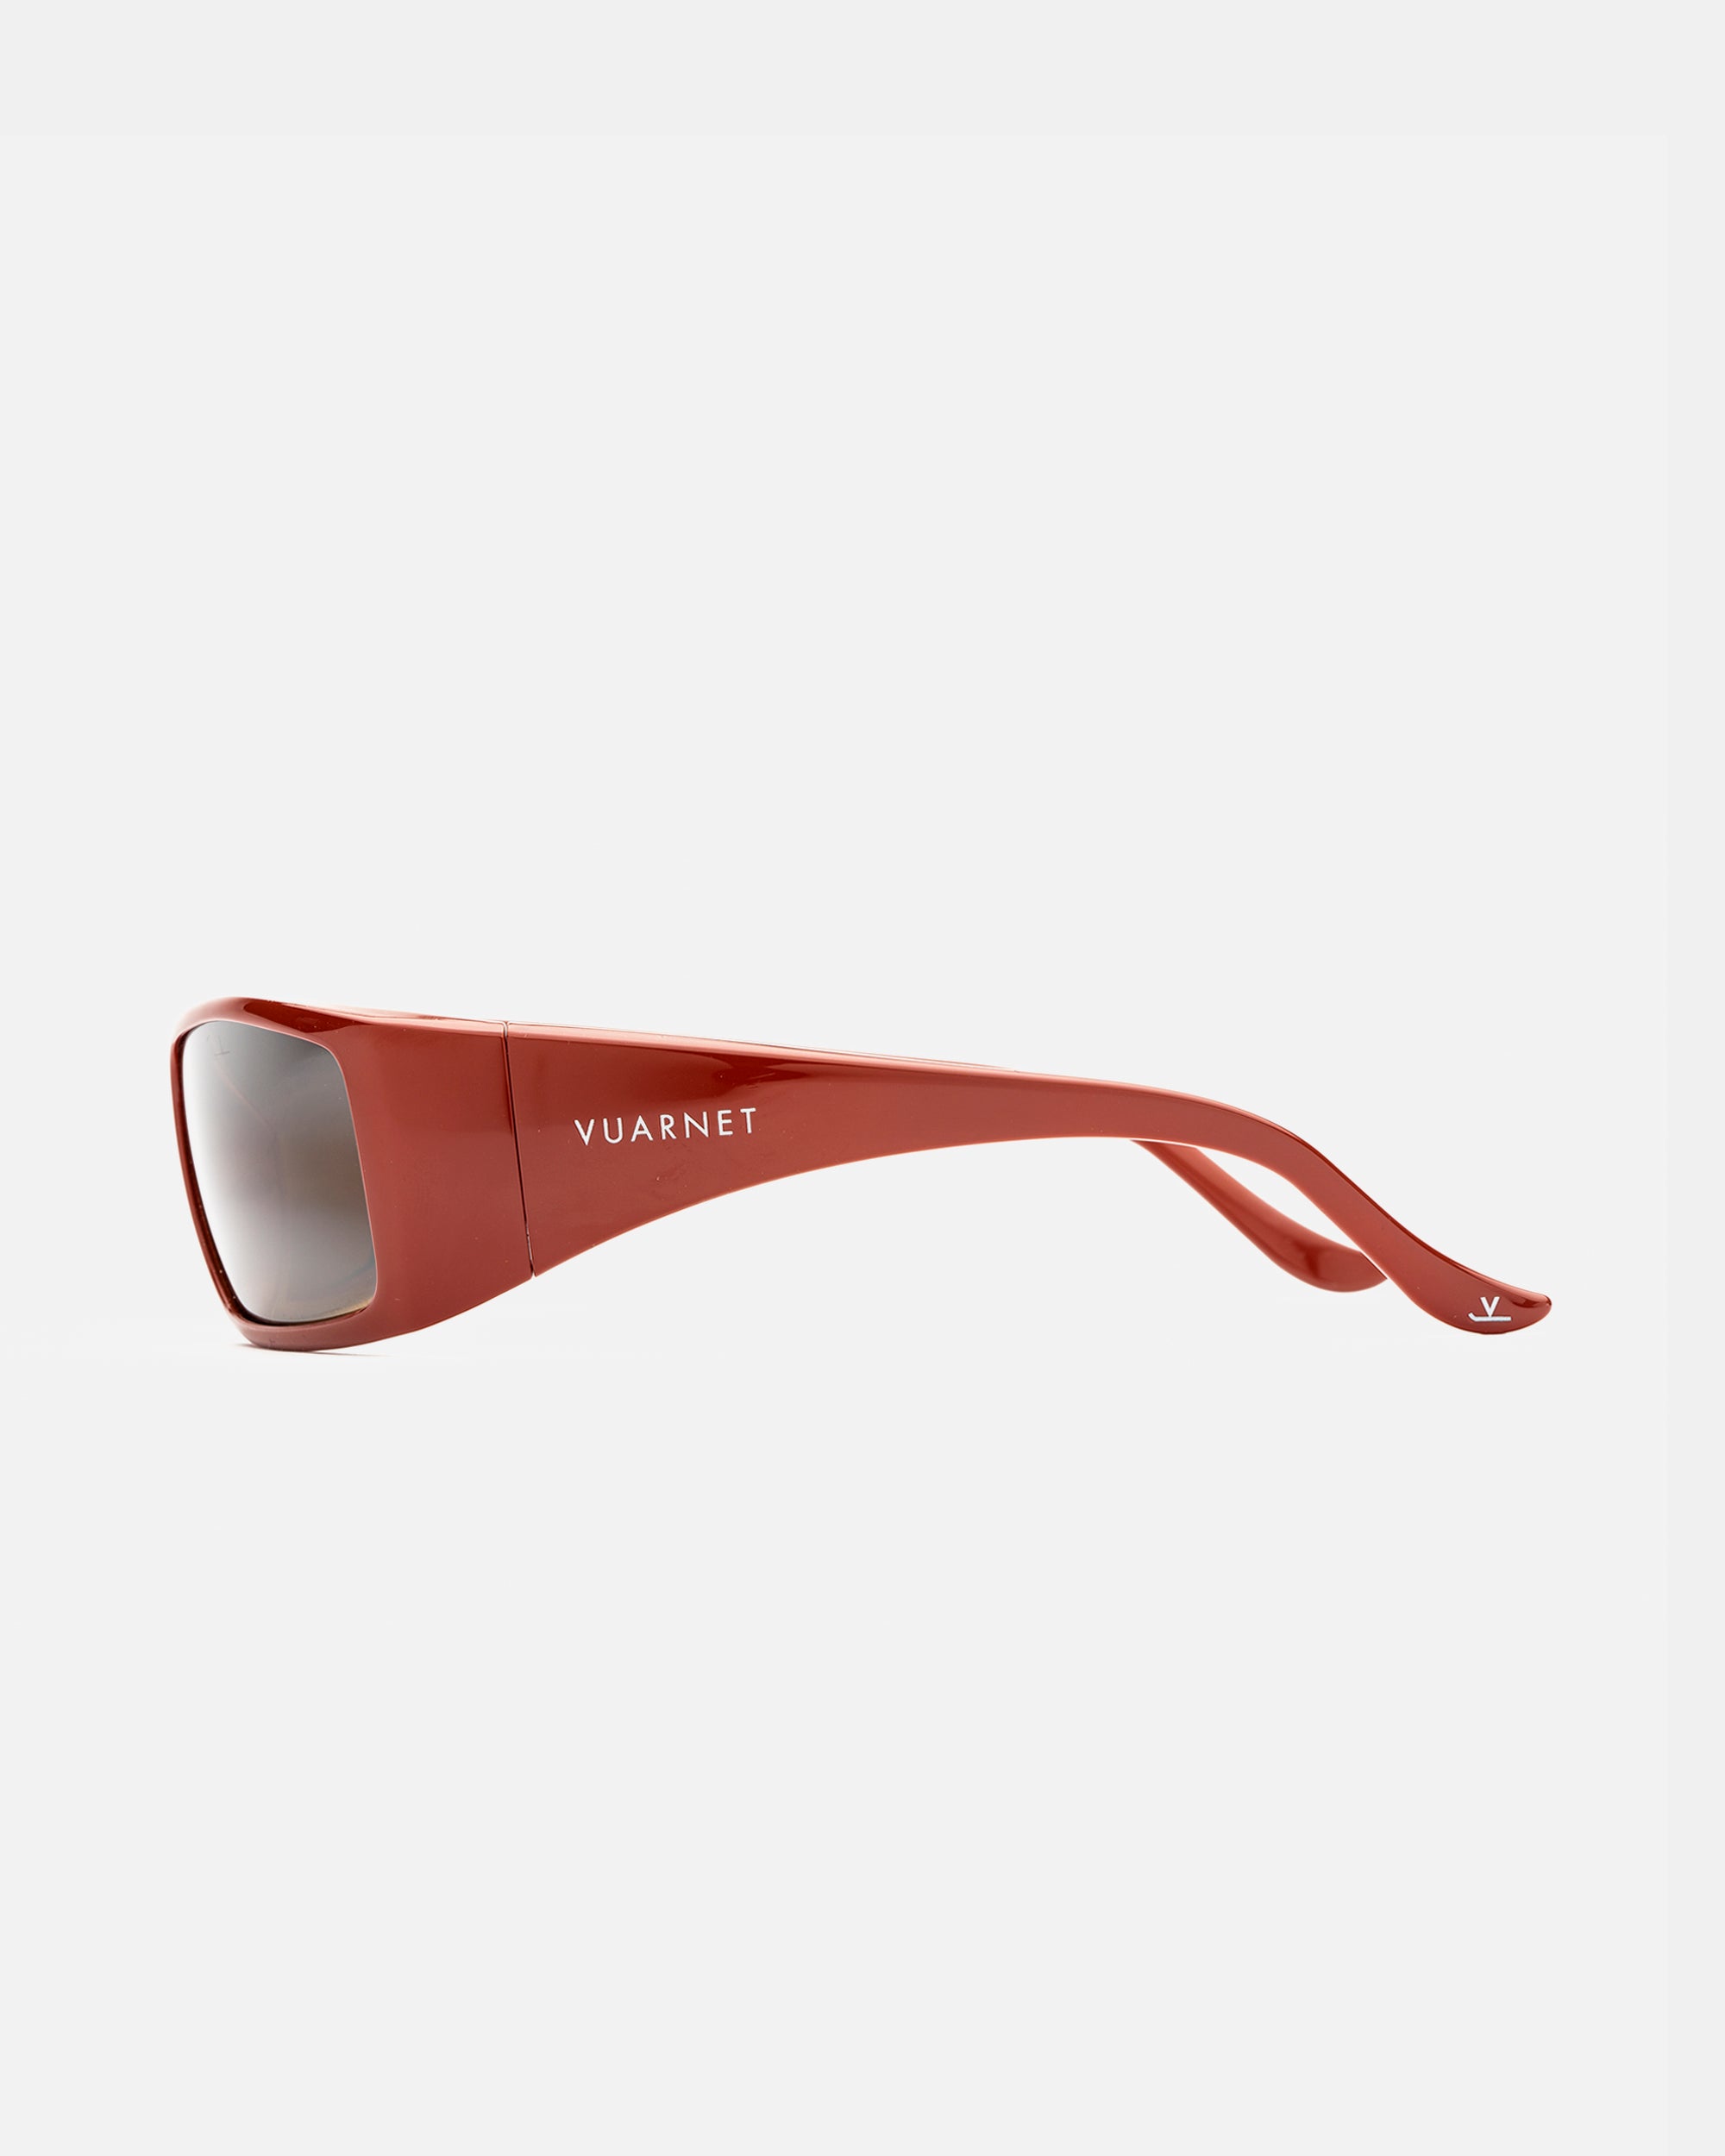 Vuarnet ALTITUDE Red - Sunglasses